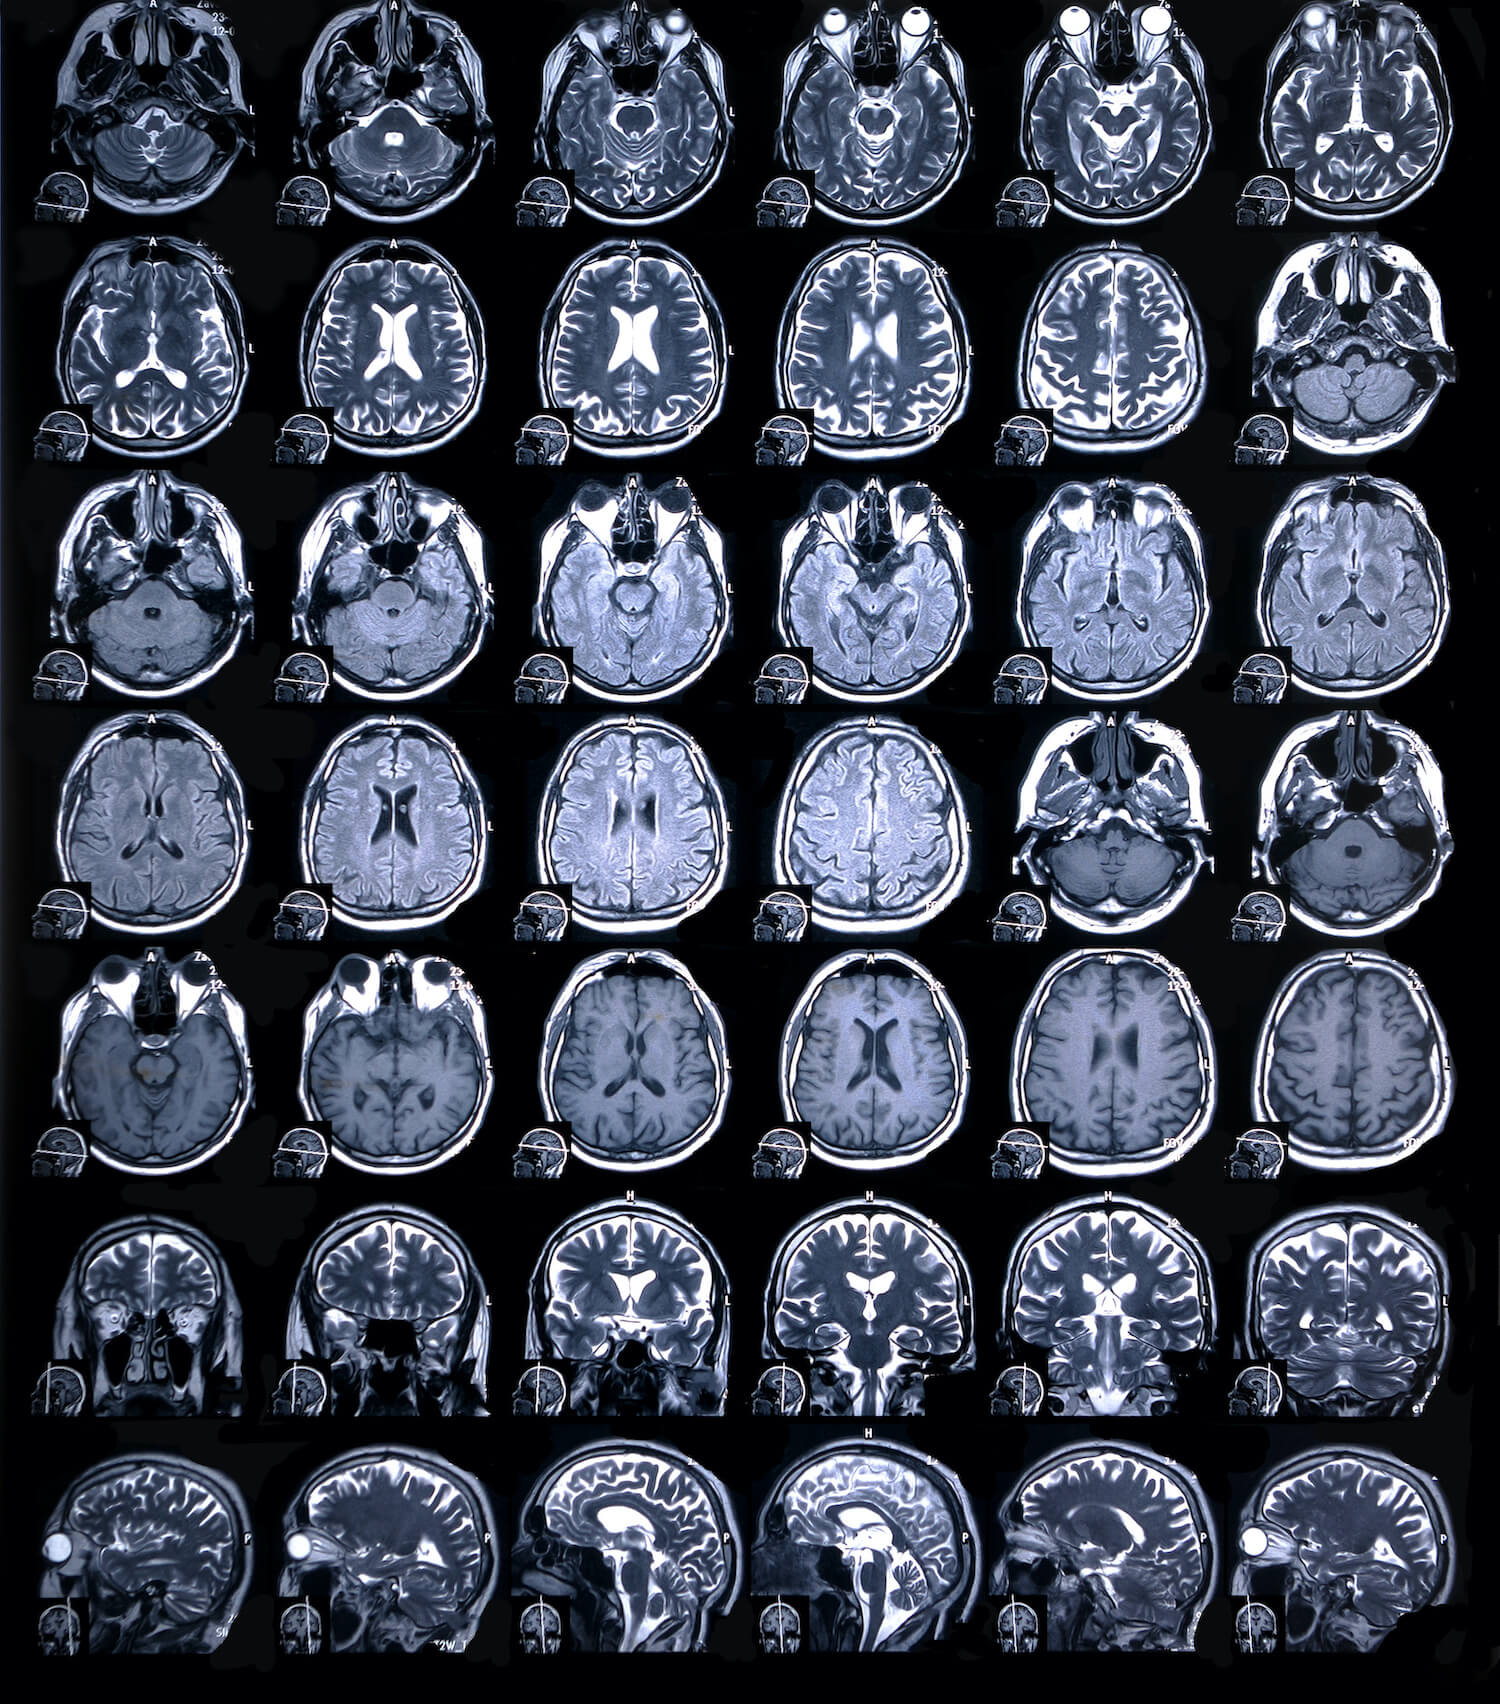 TRACK-TBI Study Focuses on Effective Treatment of Traumatic Brain Injury